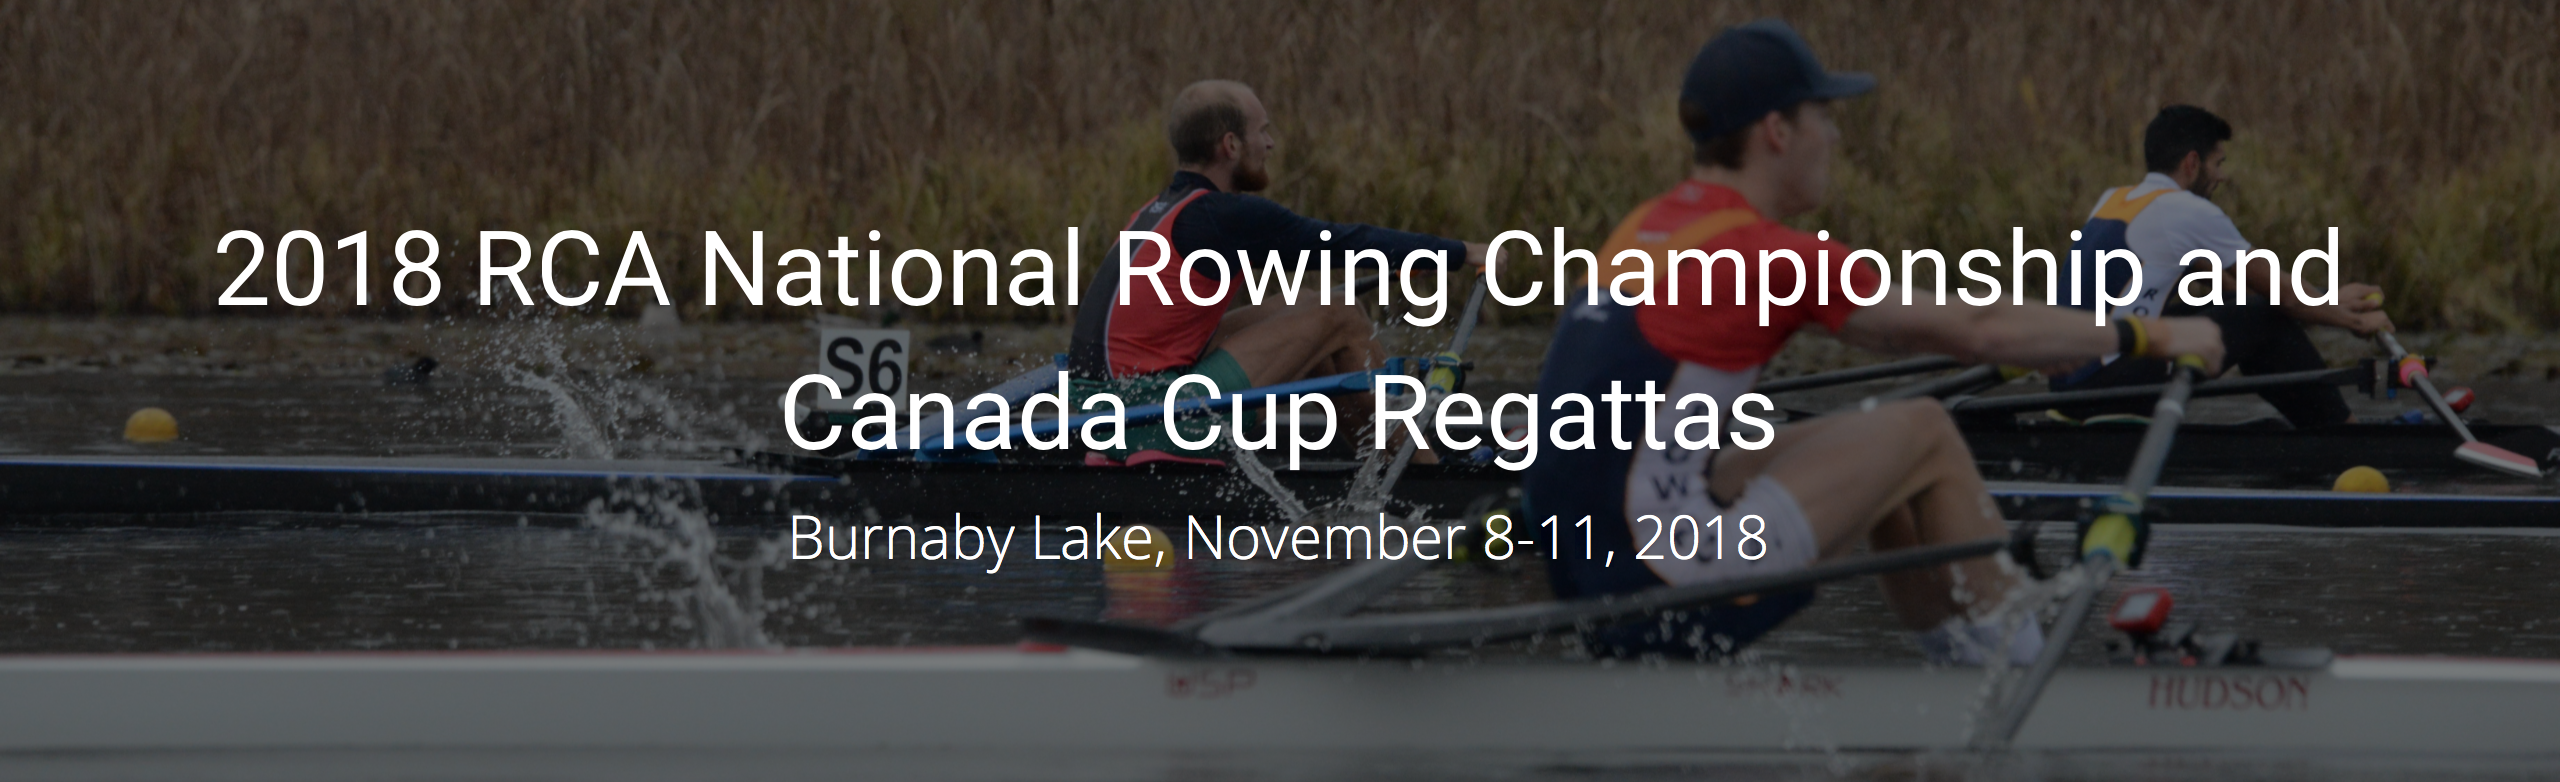 2018 RCA National Rowing Championship Regatta and Canada Cup Regatta Athlete Awards Banquet